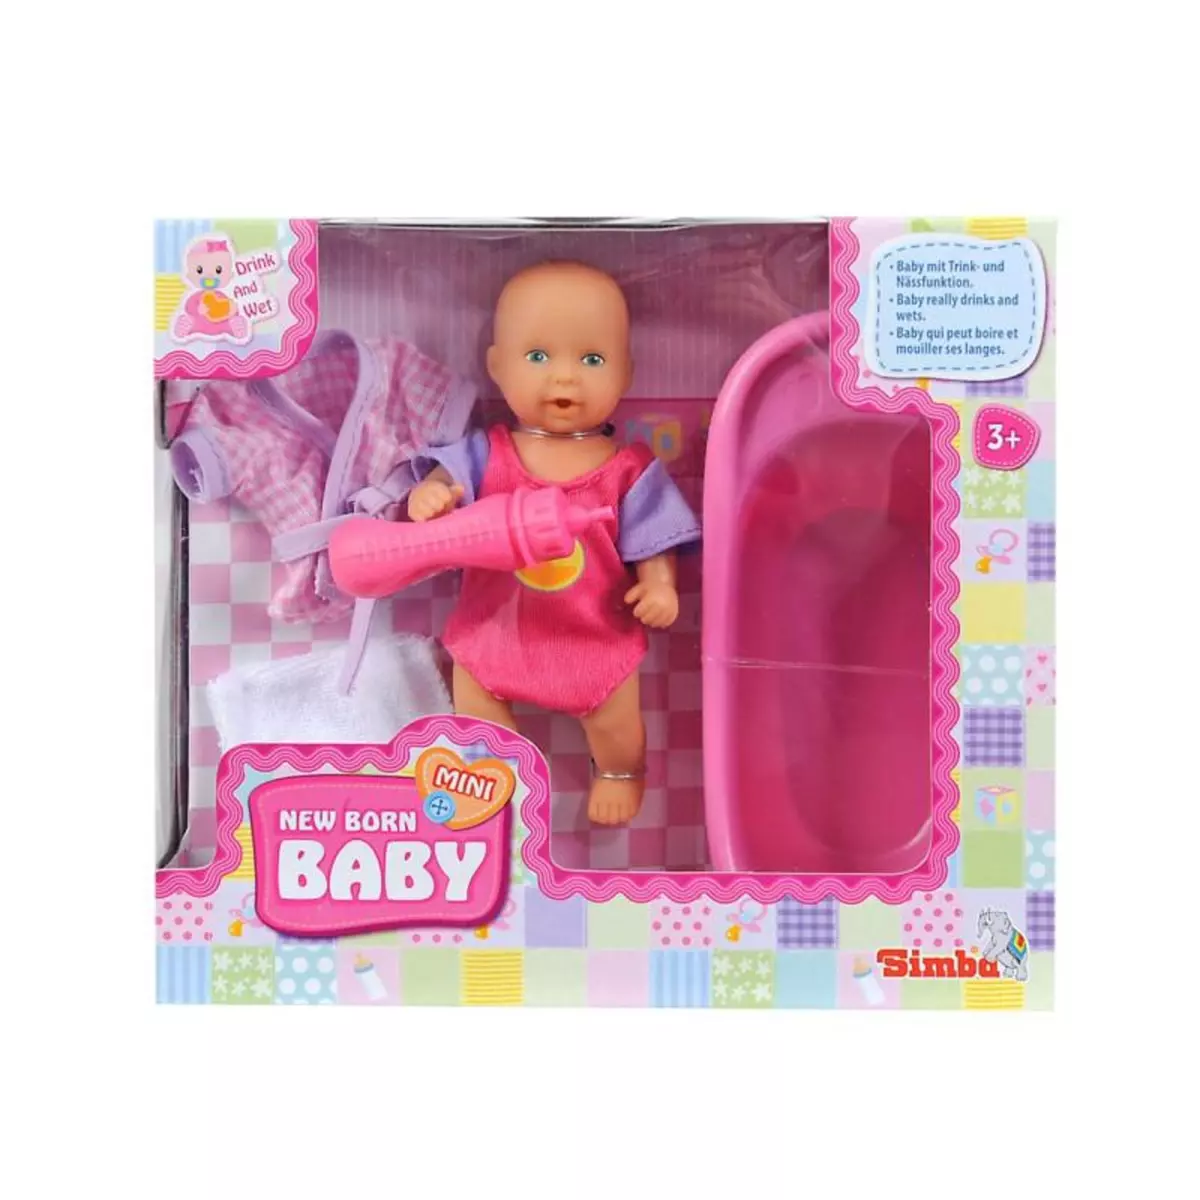 NEW BORN BABY Mini New Born Baby in bath Set